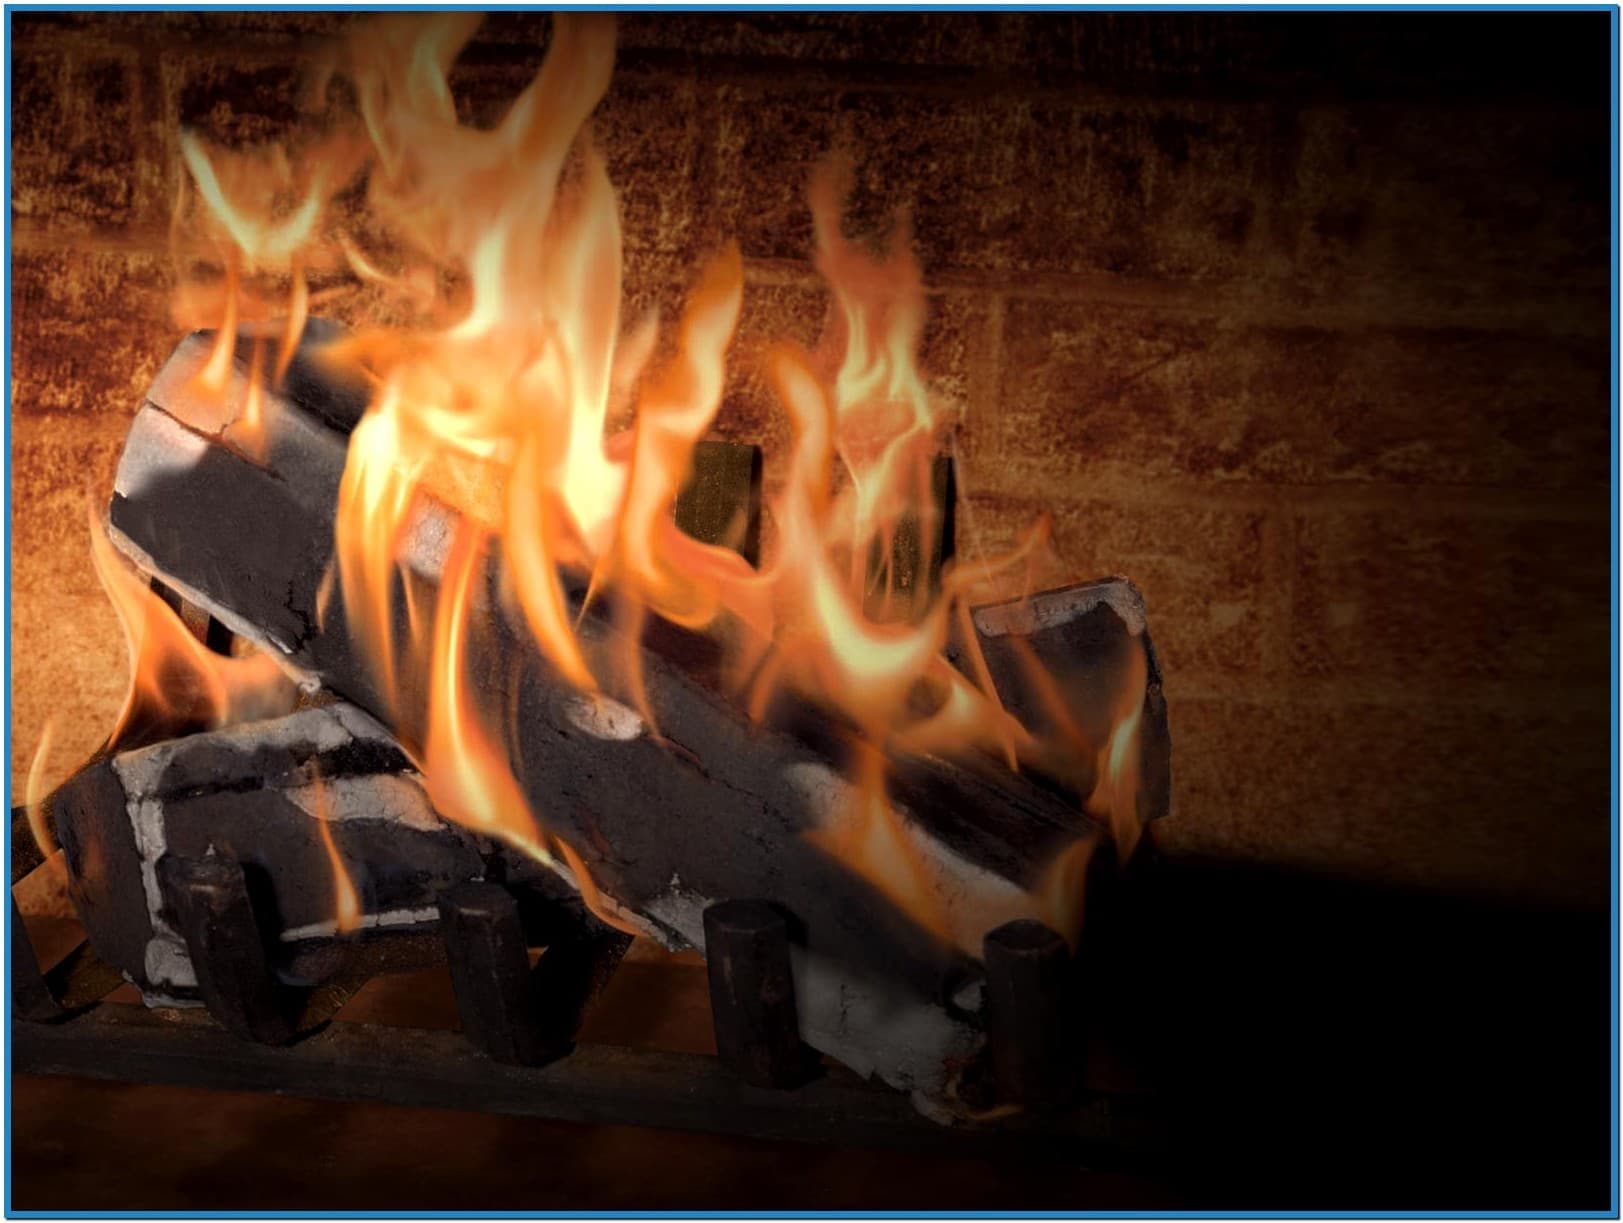 fireplace screensaver free download